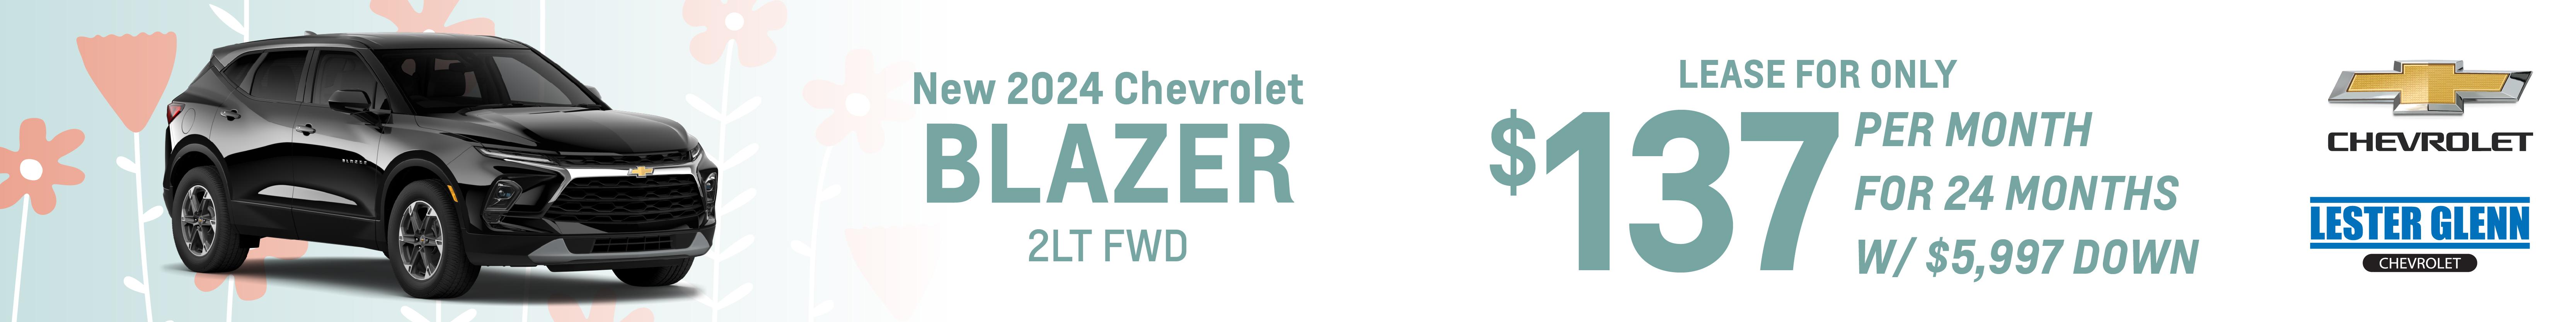 2024 Chevrolet Blazer Lease Special